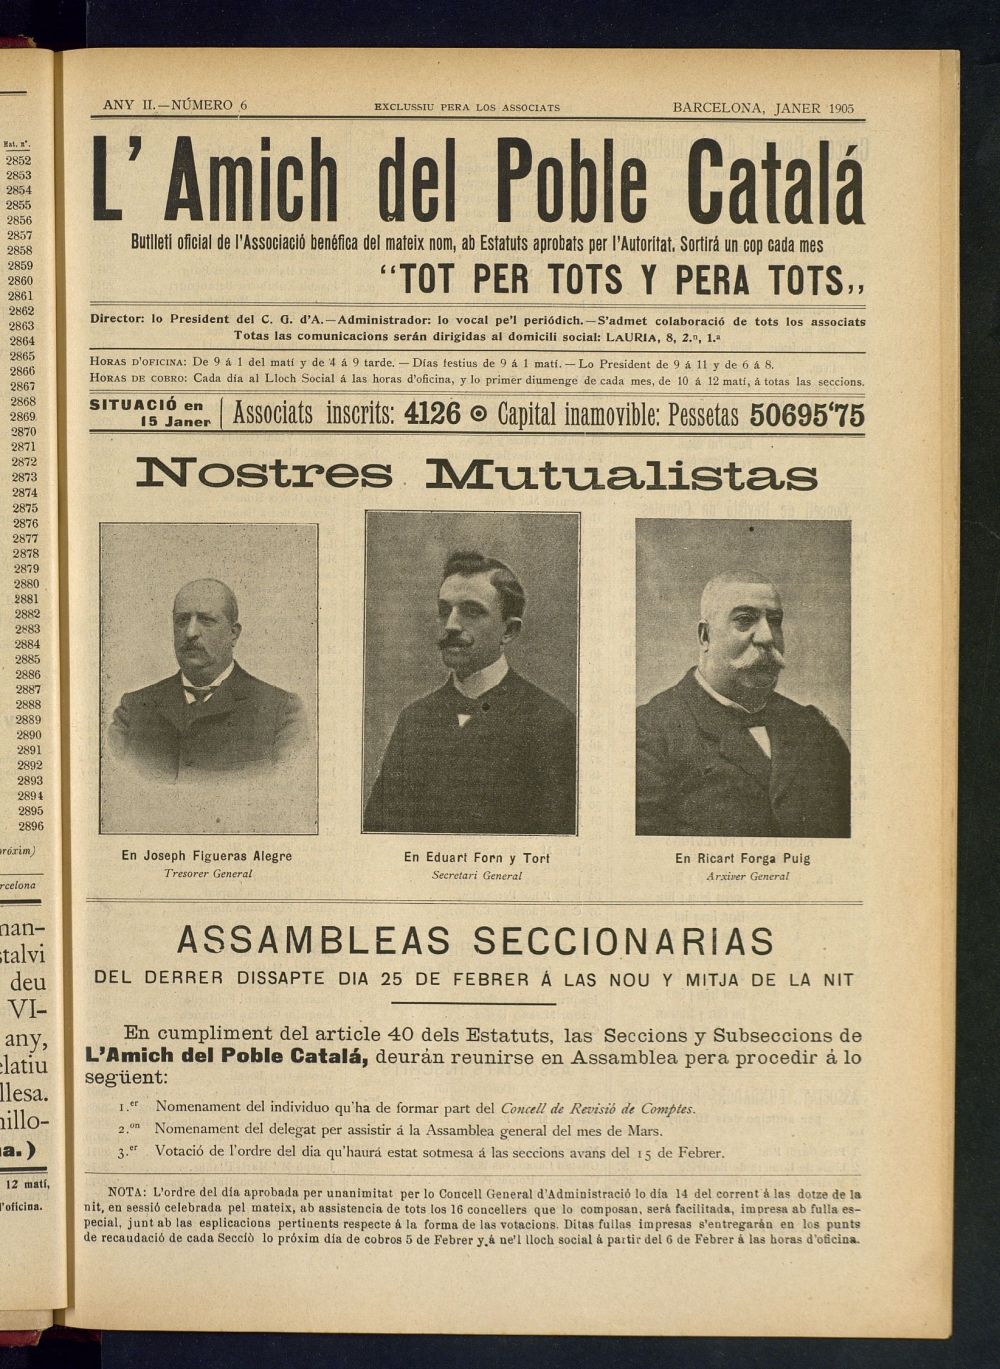 Lamich del poble catal: butllet oficial de lassociacio, ques publicara una volta cada mes de jane de 1905